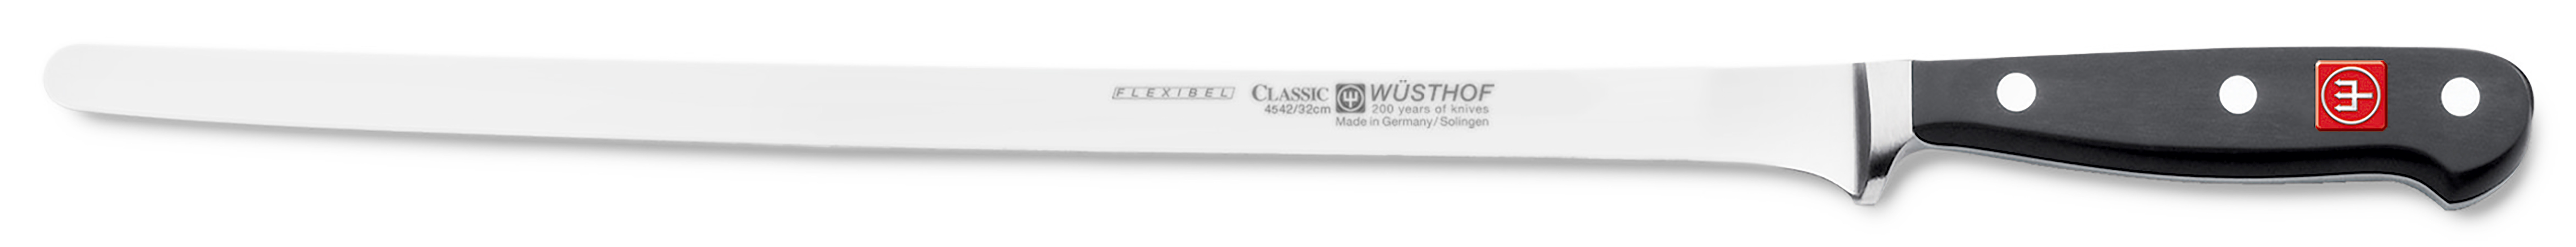 Wüsthof CLASSIC Lachsmesser 32cm 